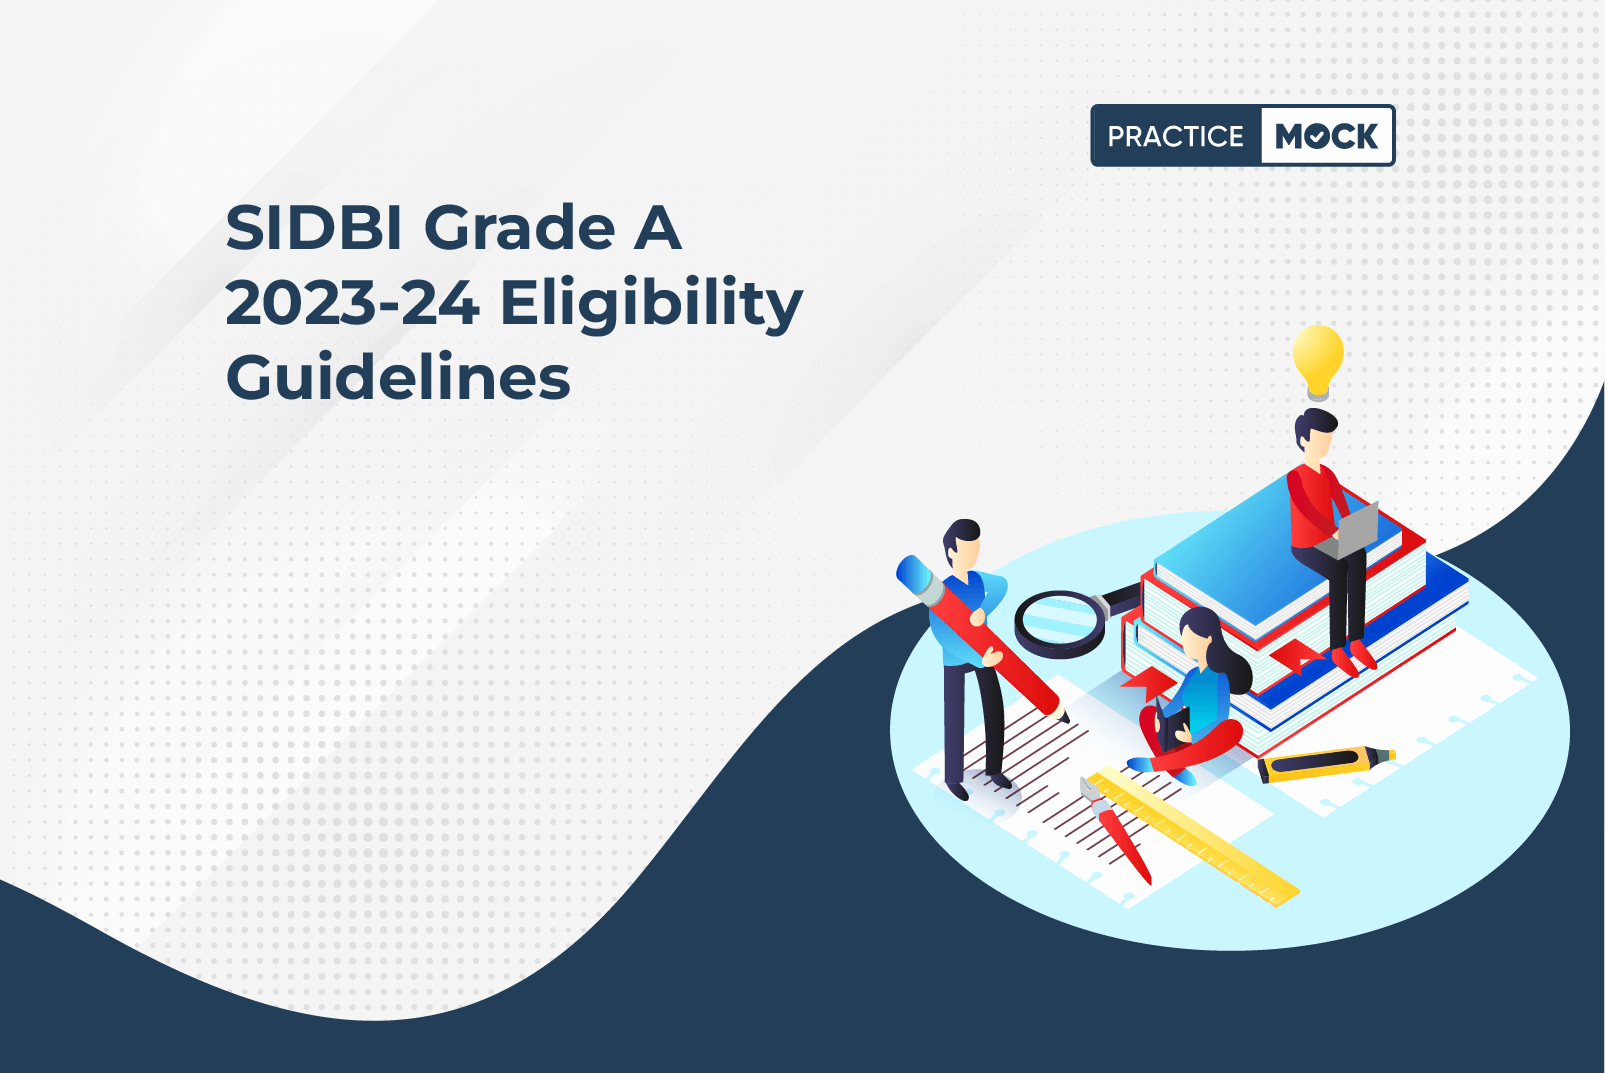 SIDBI Grade A 2023-24 Eligibility Guidelines